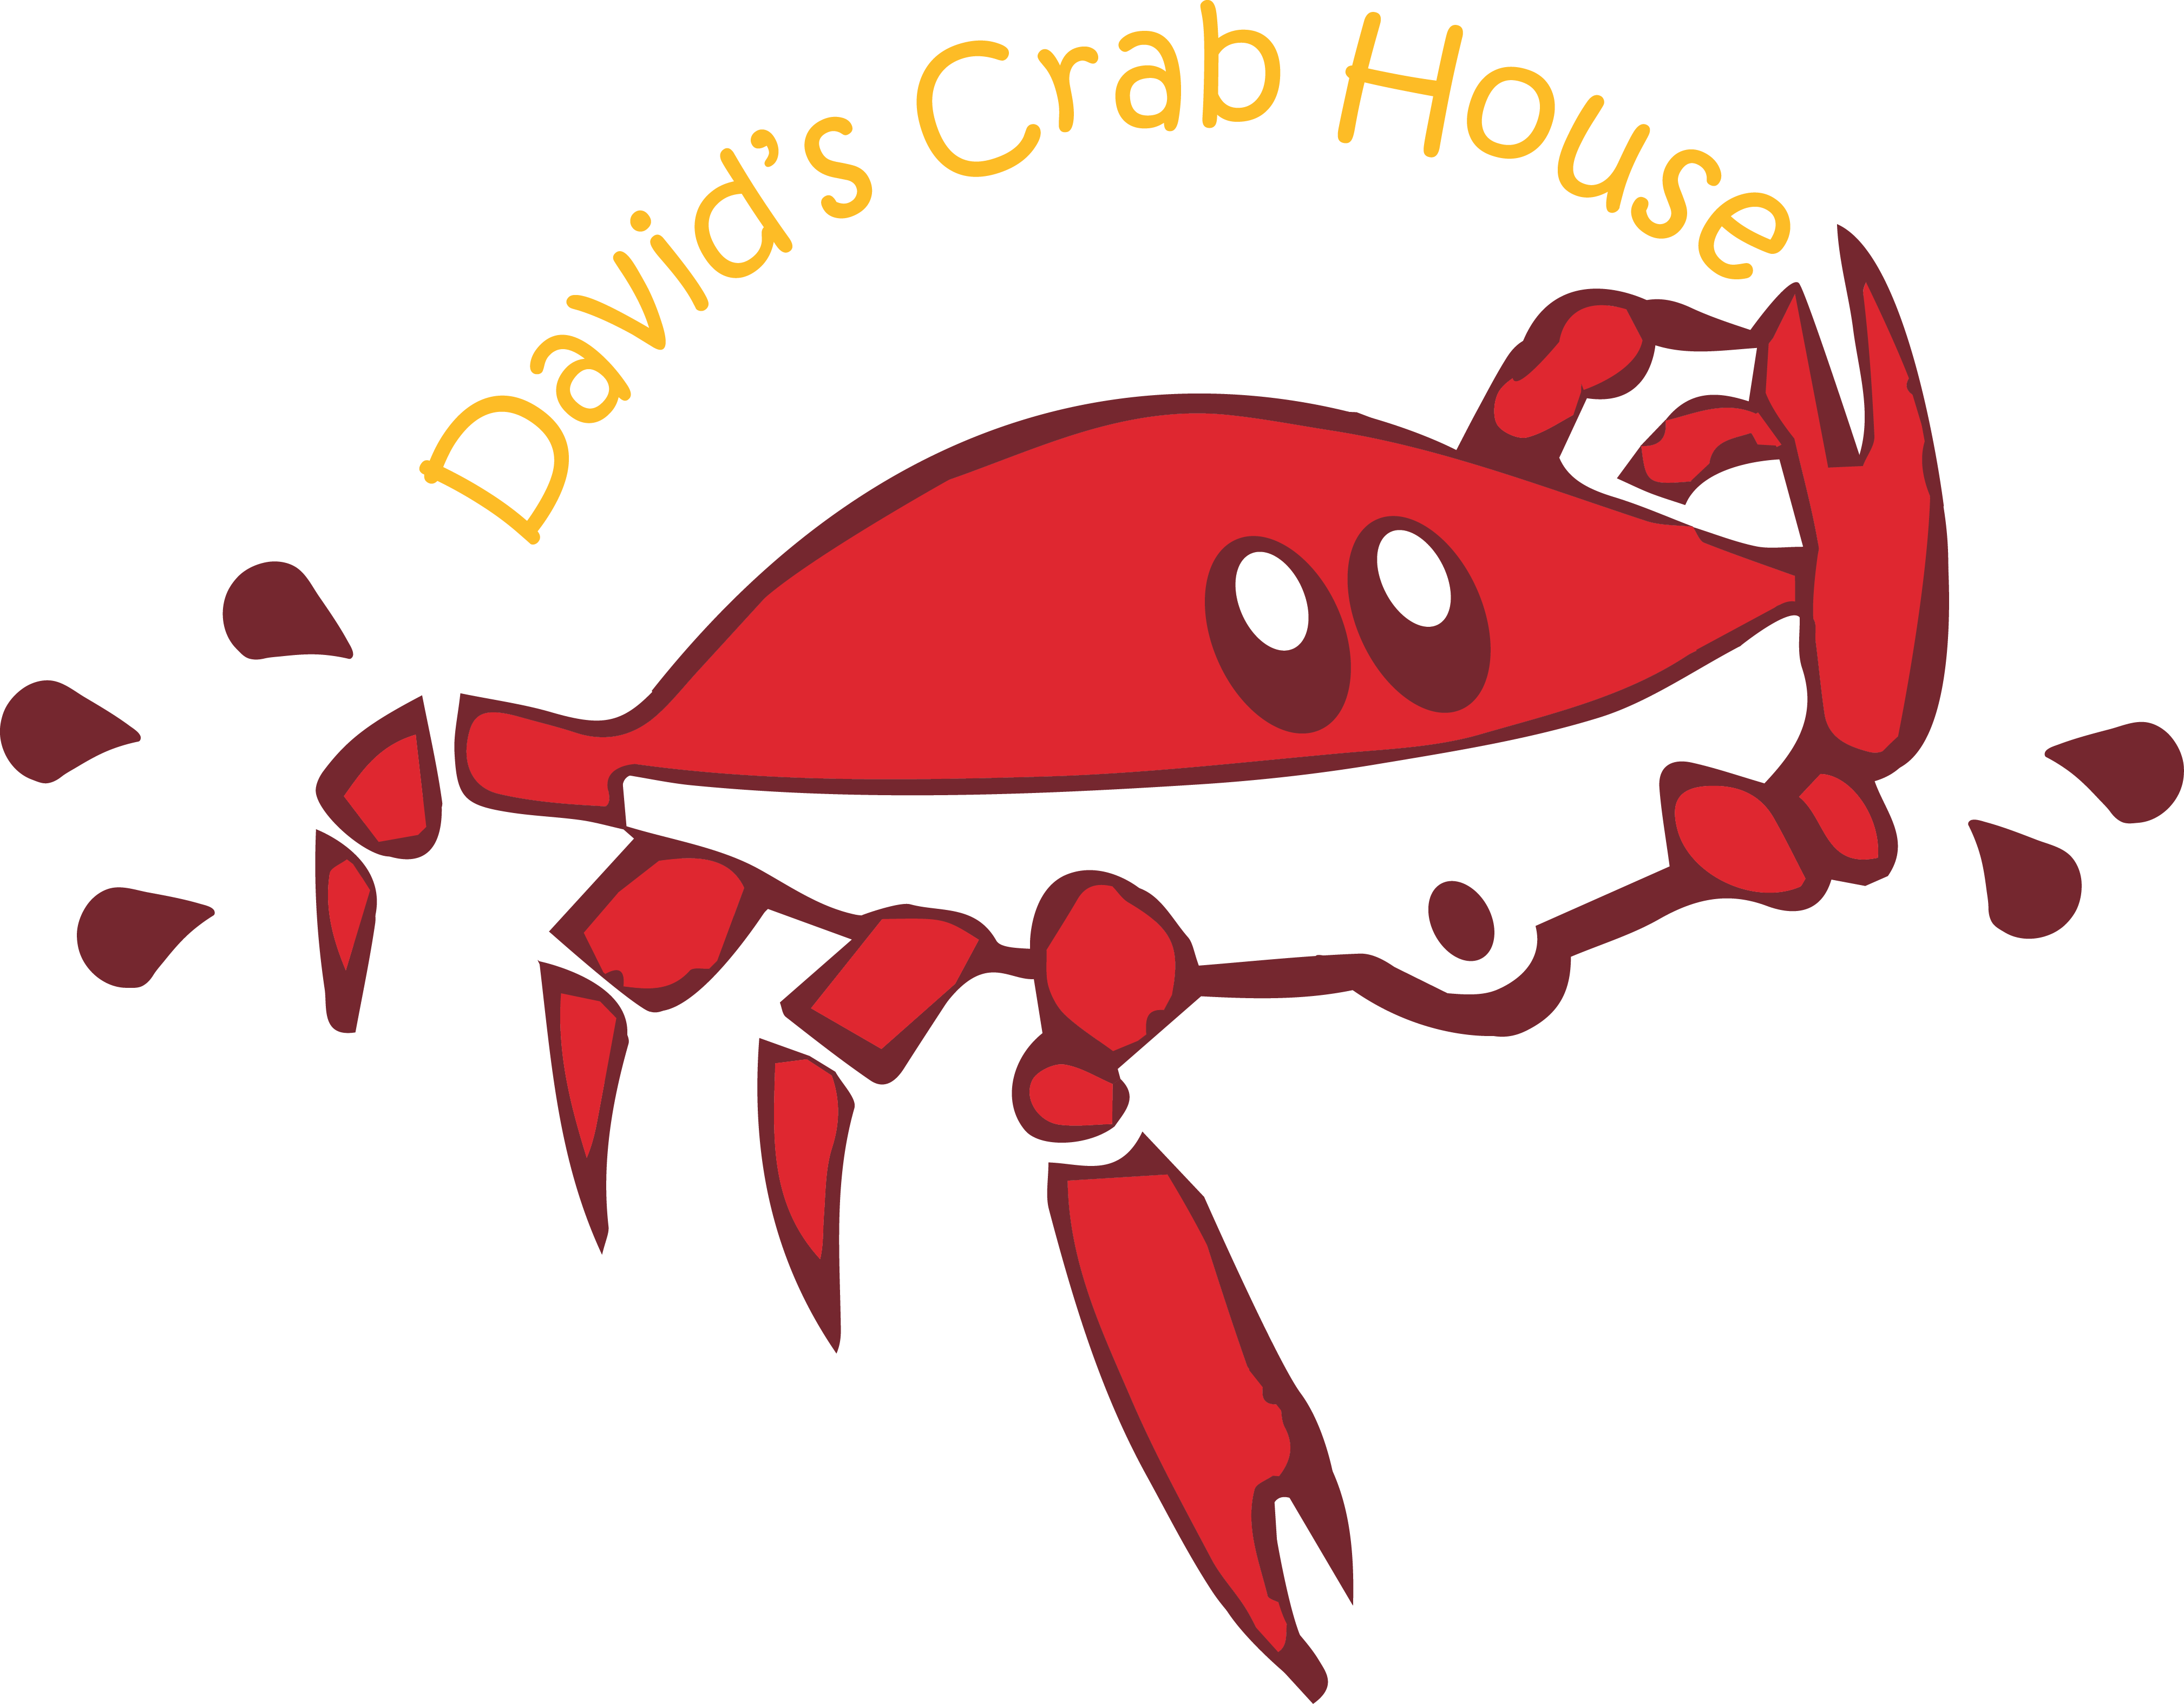 David's Crab House Of Savannah (4035x3148)